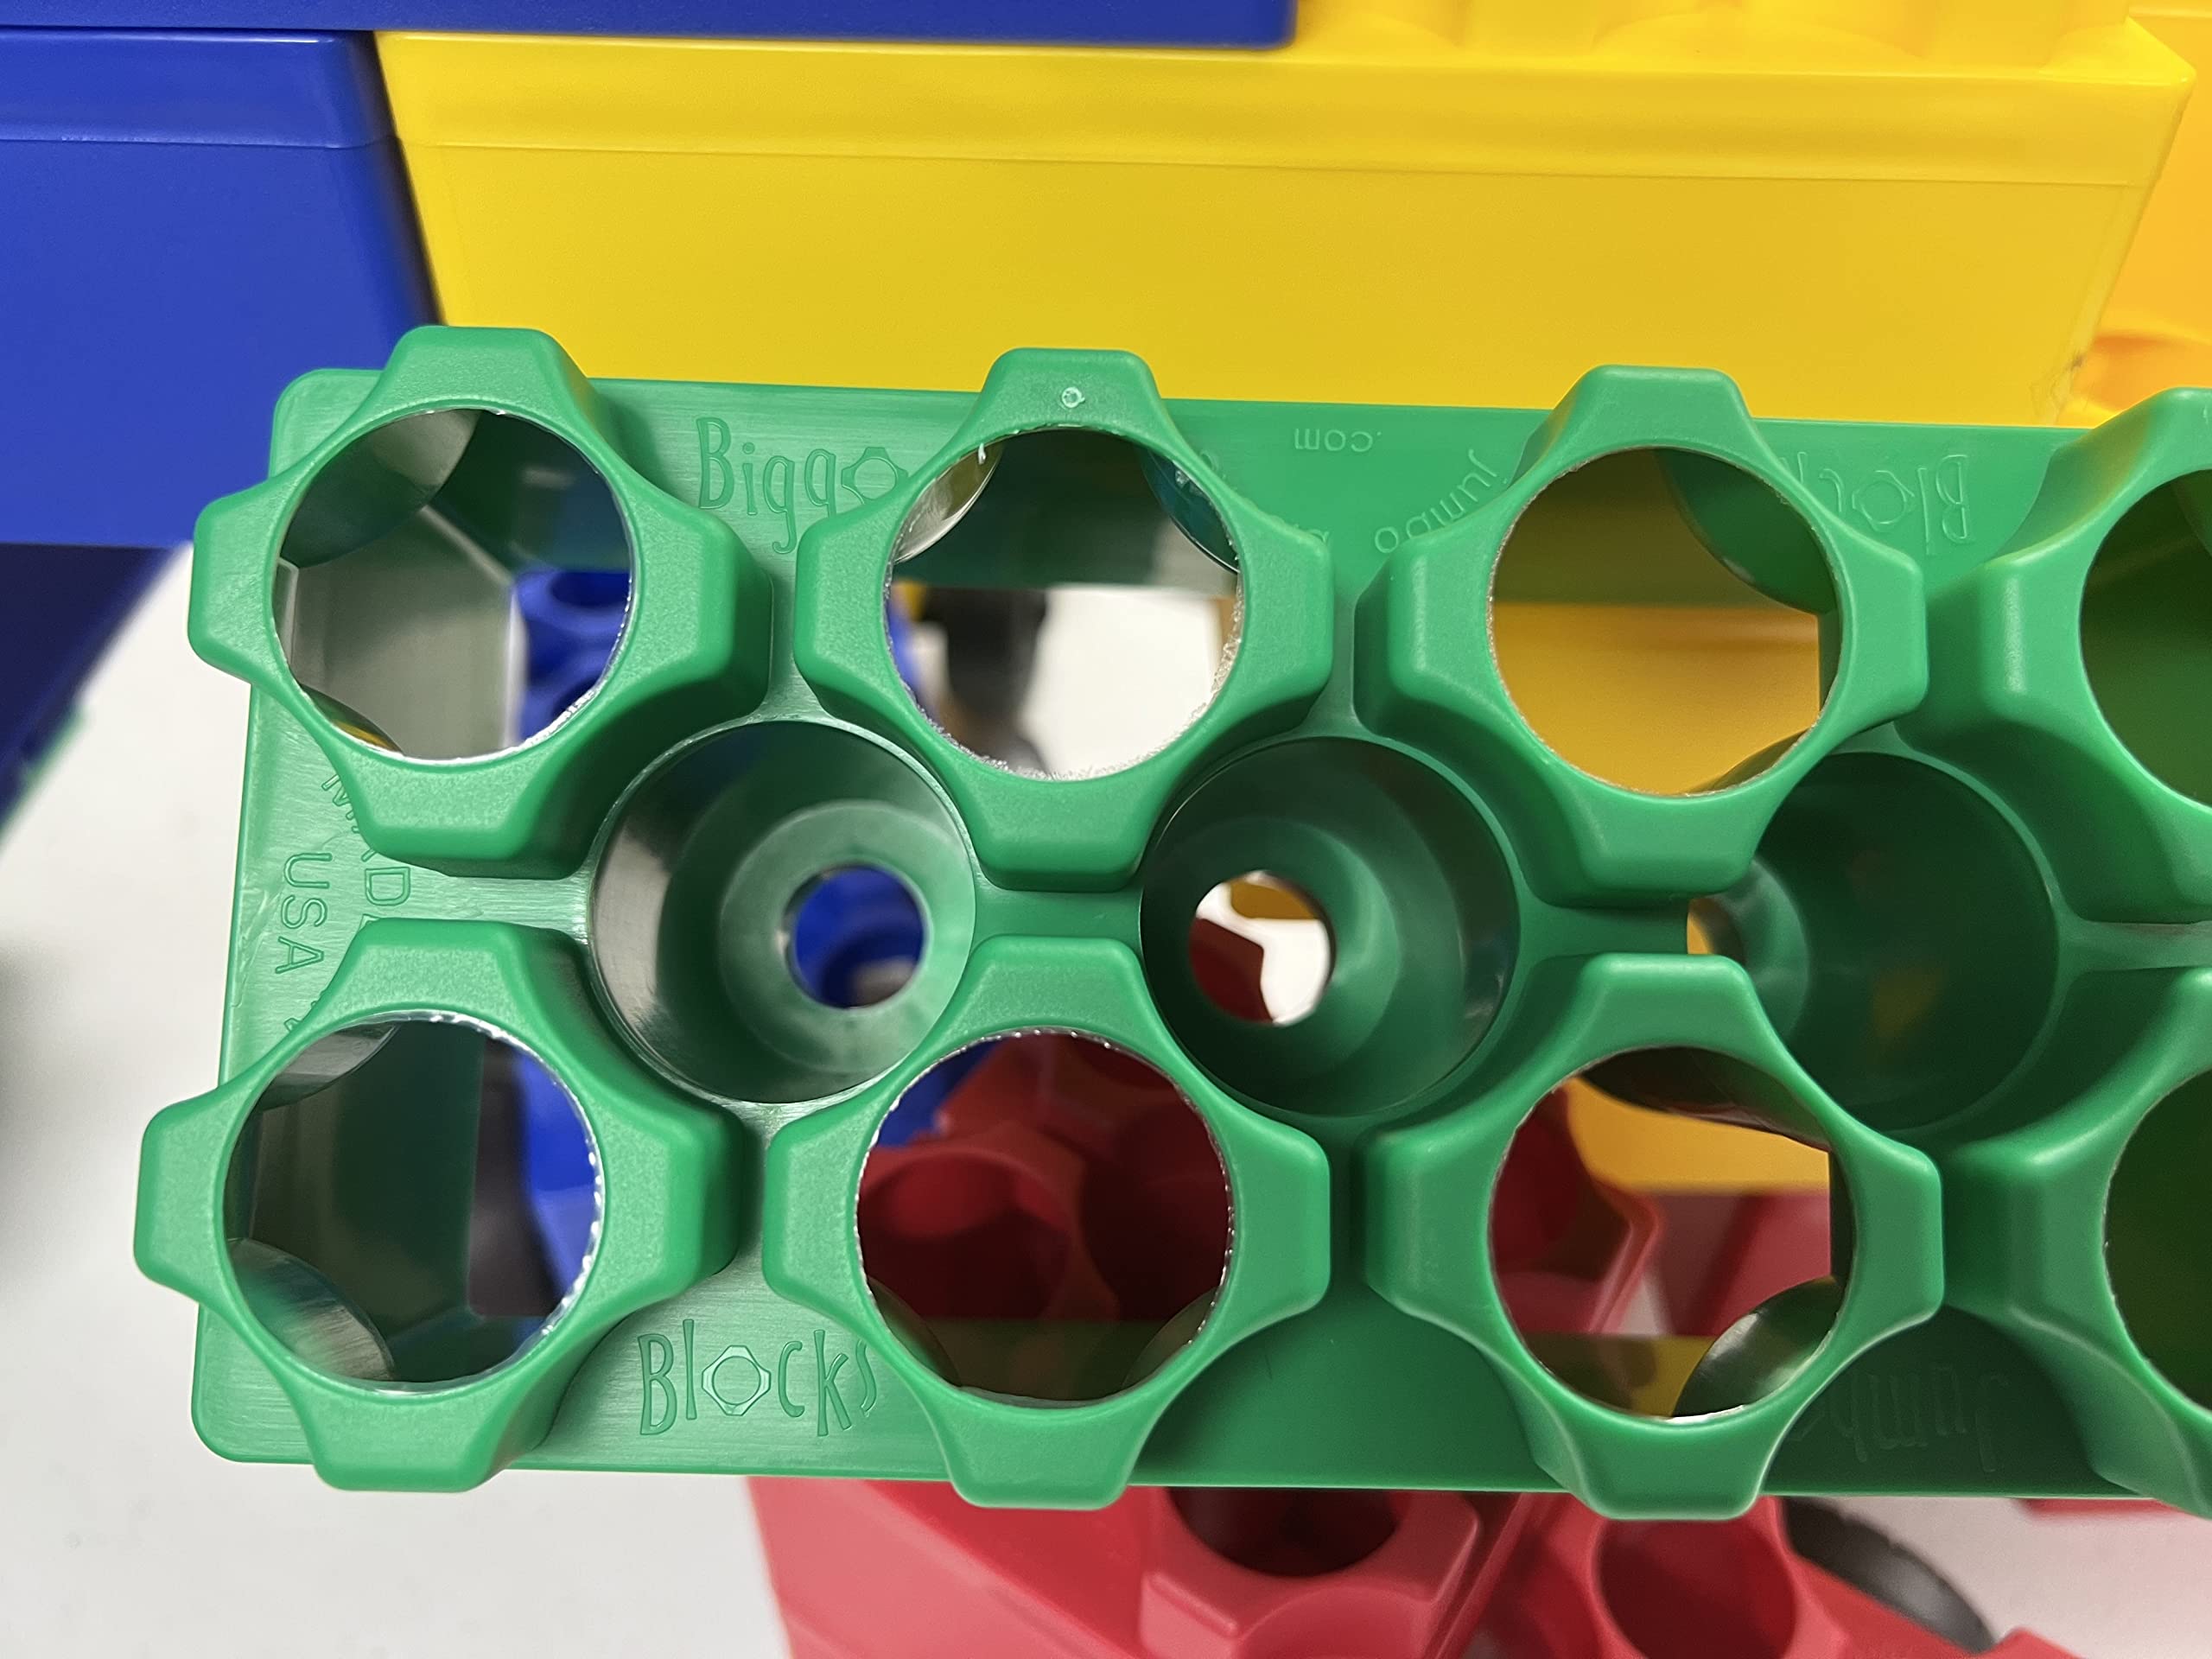 24 pc BiggoBlocks Jumbo Blocks Set | 20 Large Blocks | 4 Small Blocks | 4 Colors Red Yellow Green Blue | Made in The USA